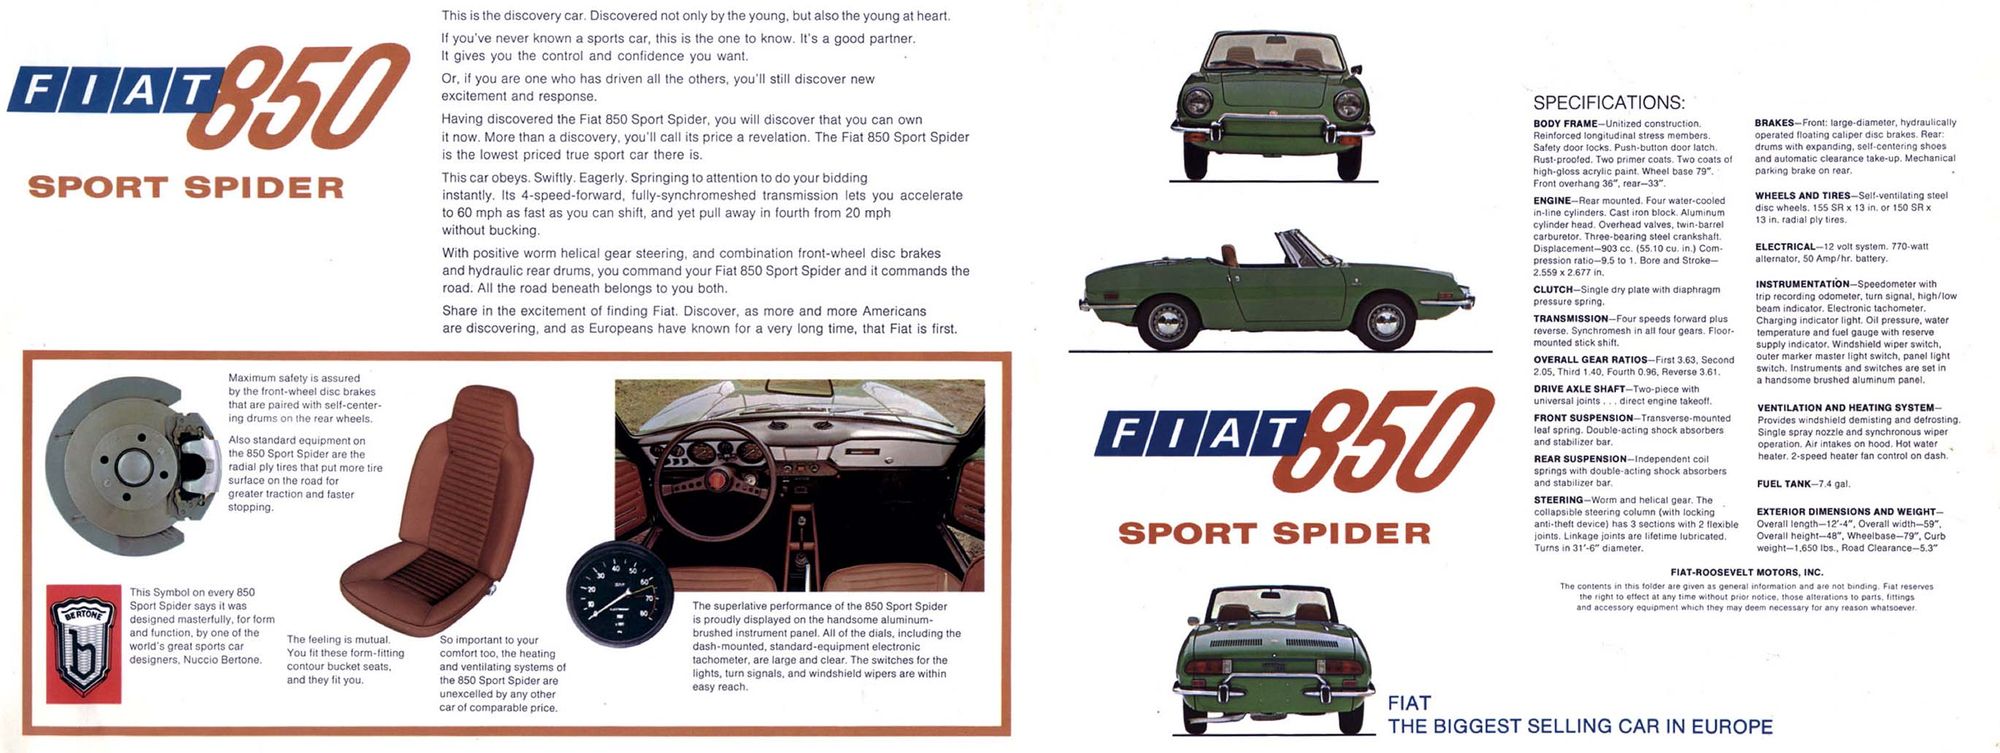 dettagli brochure Fiat 850 Sport Spider America